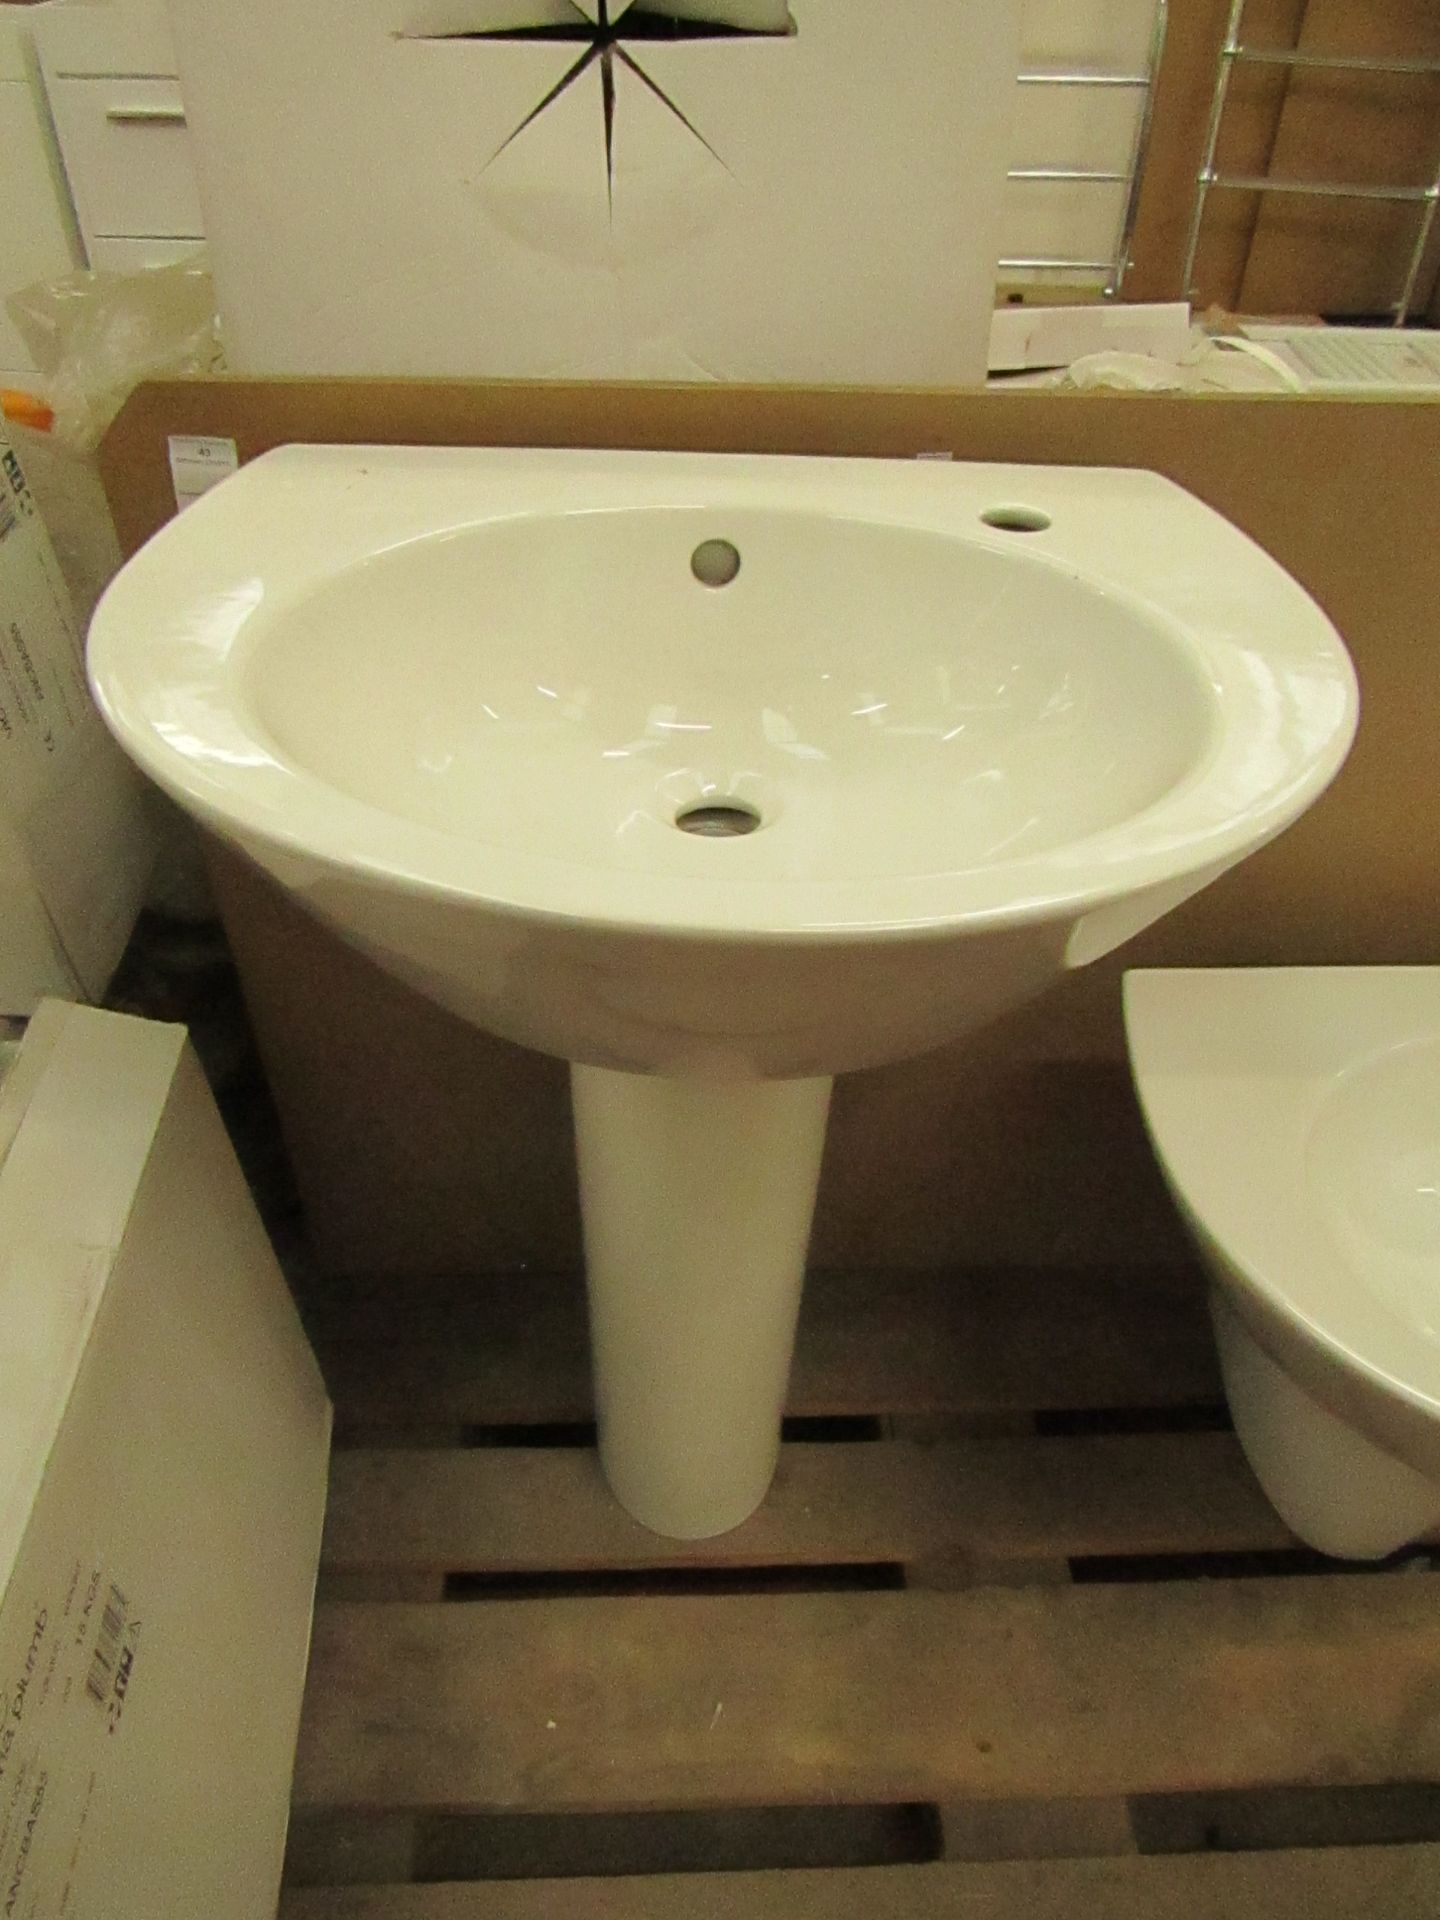 Bathroom Sink Set, Includes: - Ancona 550mm 1TH Basin - Ancona Full Pedestal Both New & boxed (2x